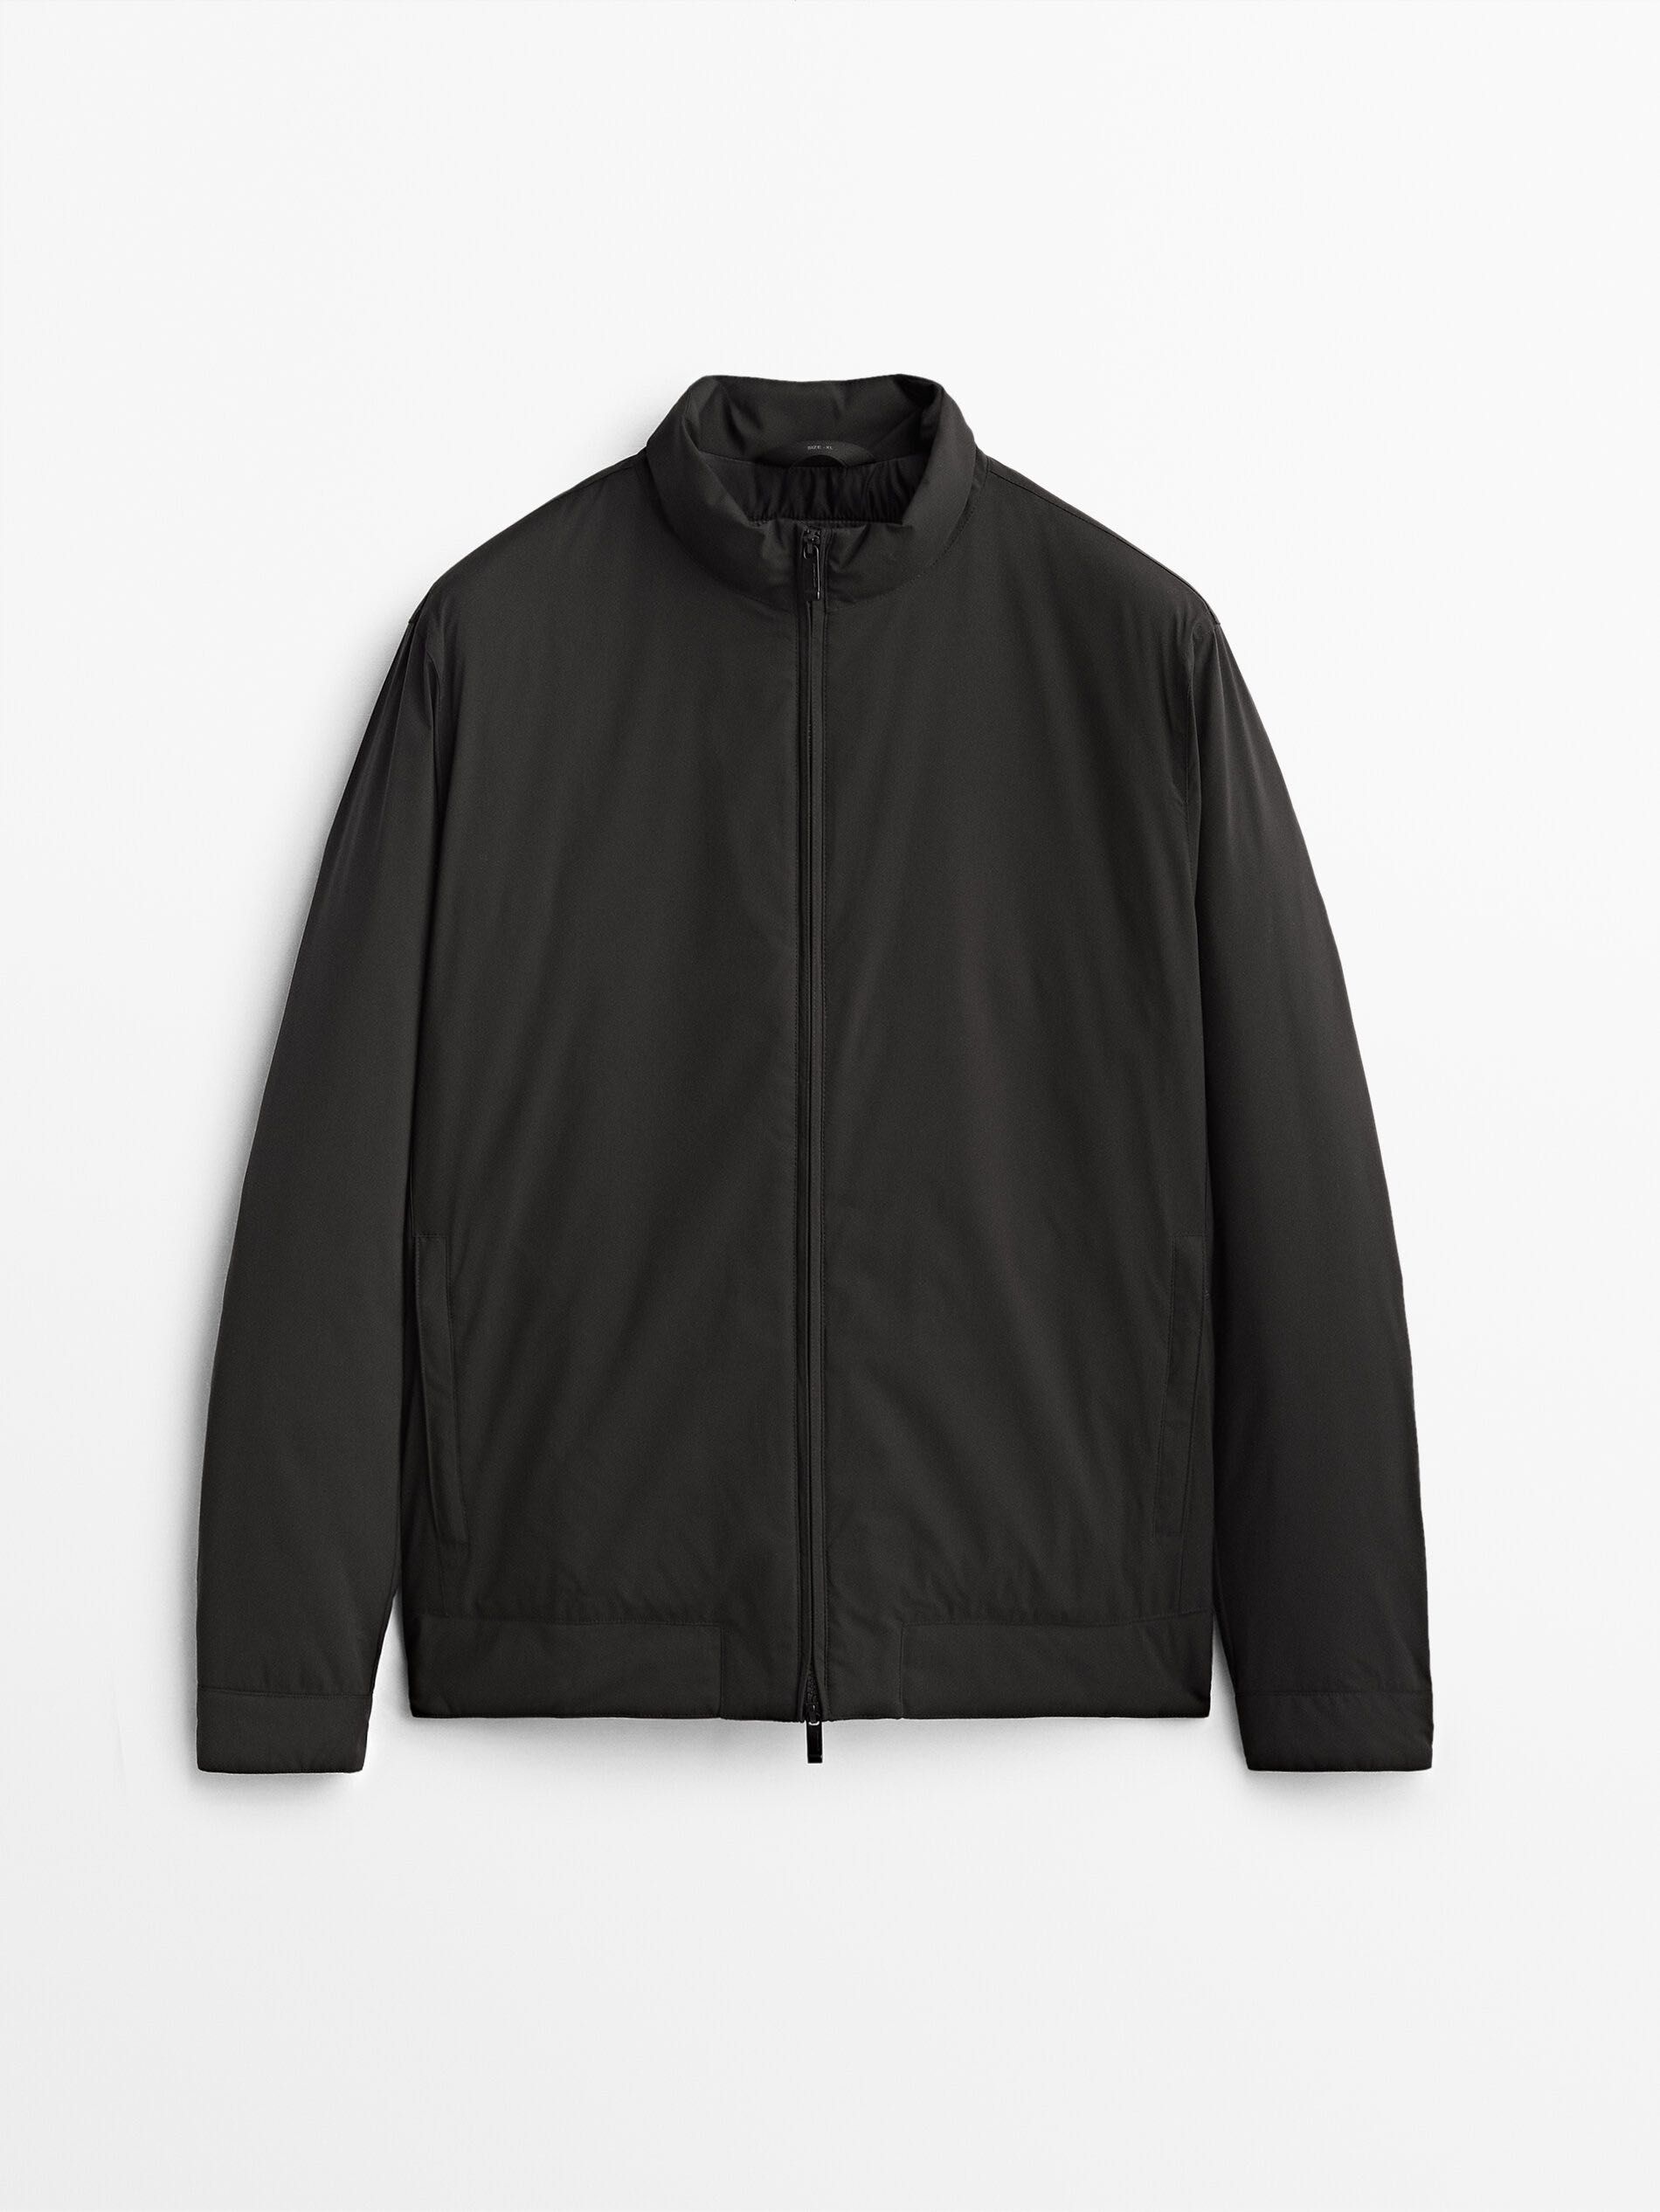 Куртка Massimo Dutti LIGHTWEIGHT JACKET, качественная, утеплённая ориг